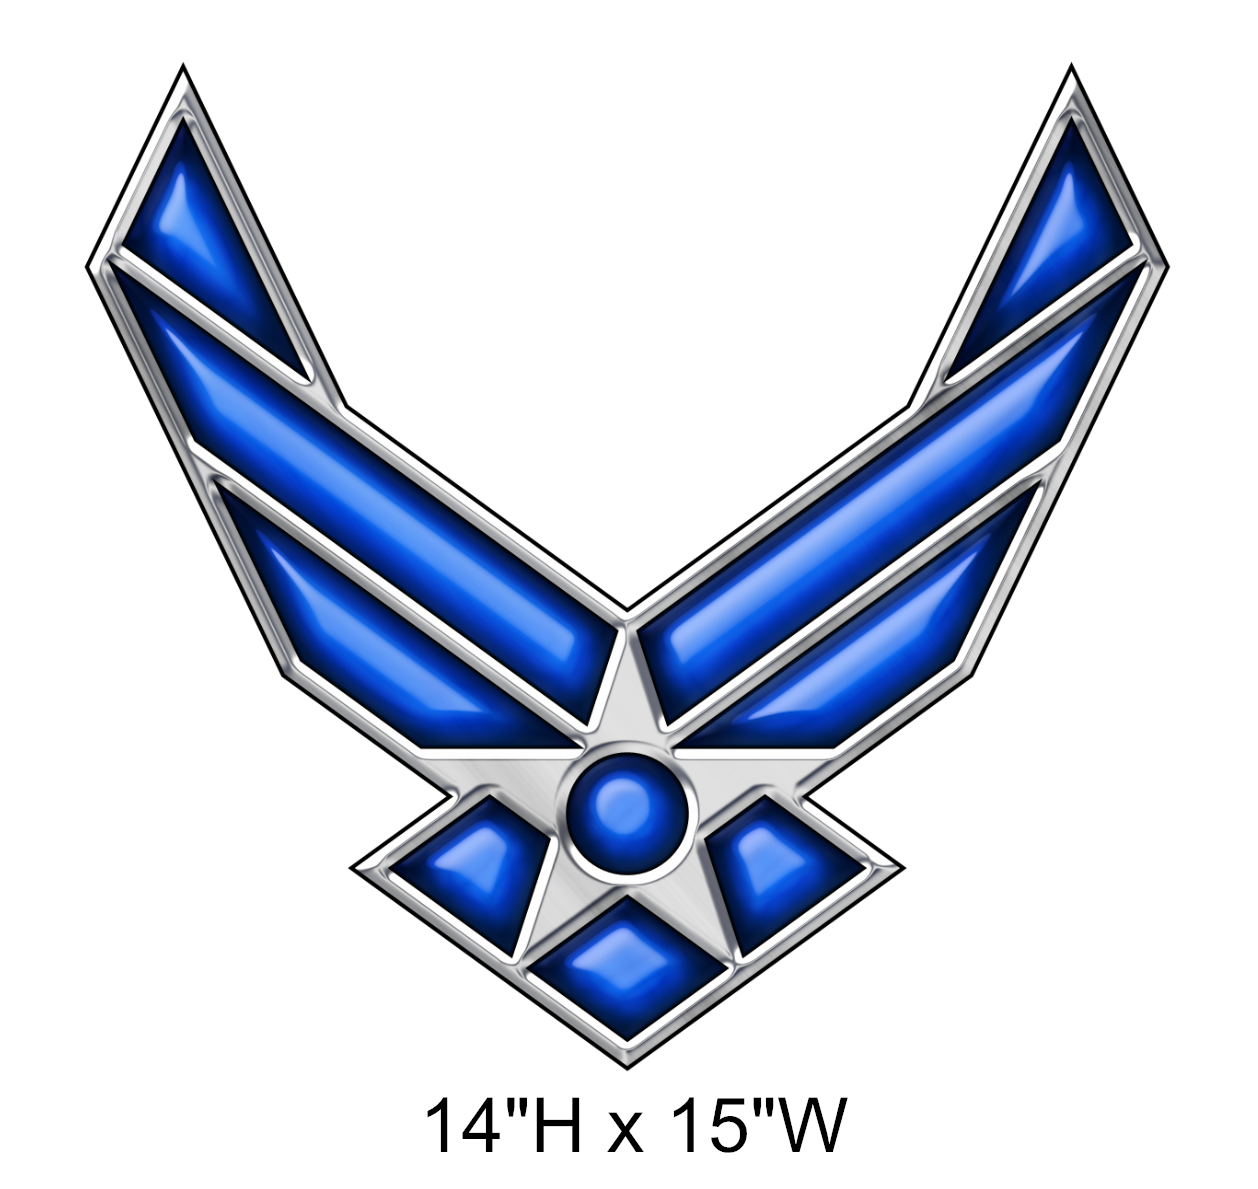 USAF LOGO 14 X 15